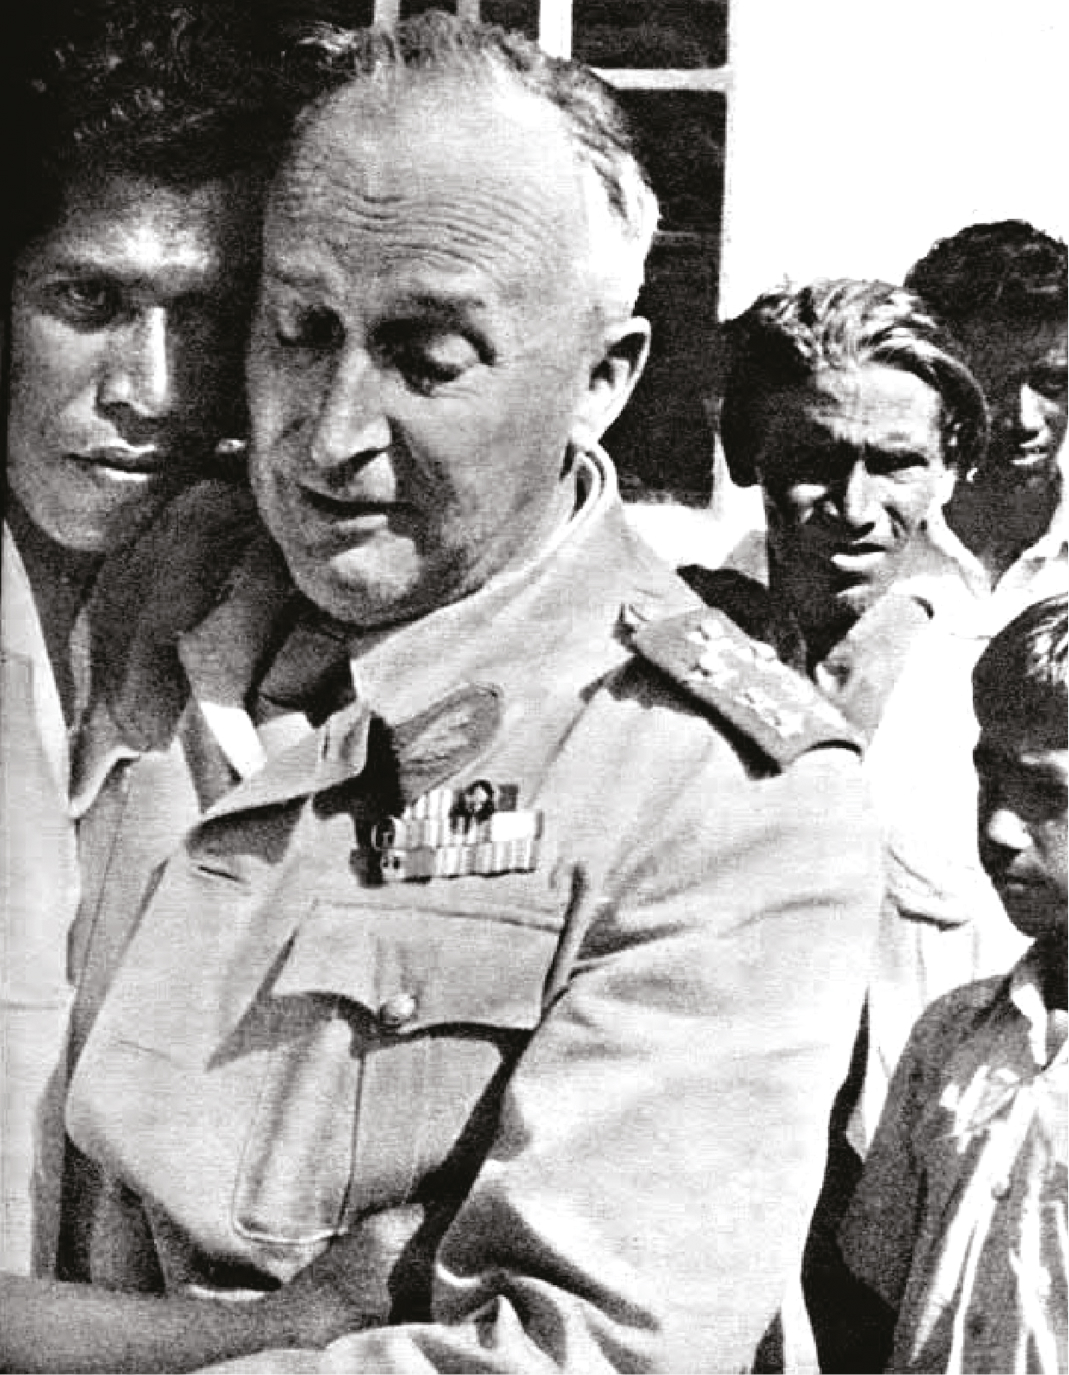 General Vassalo e Silva, após rendição. Revista Paris Match